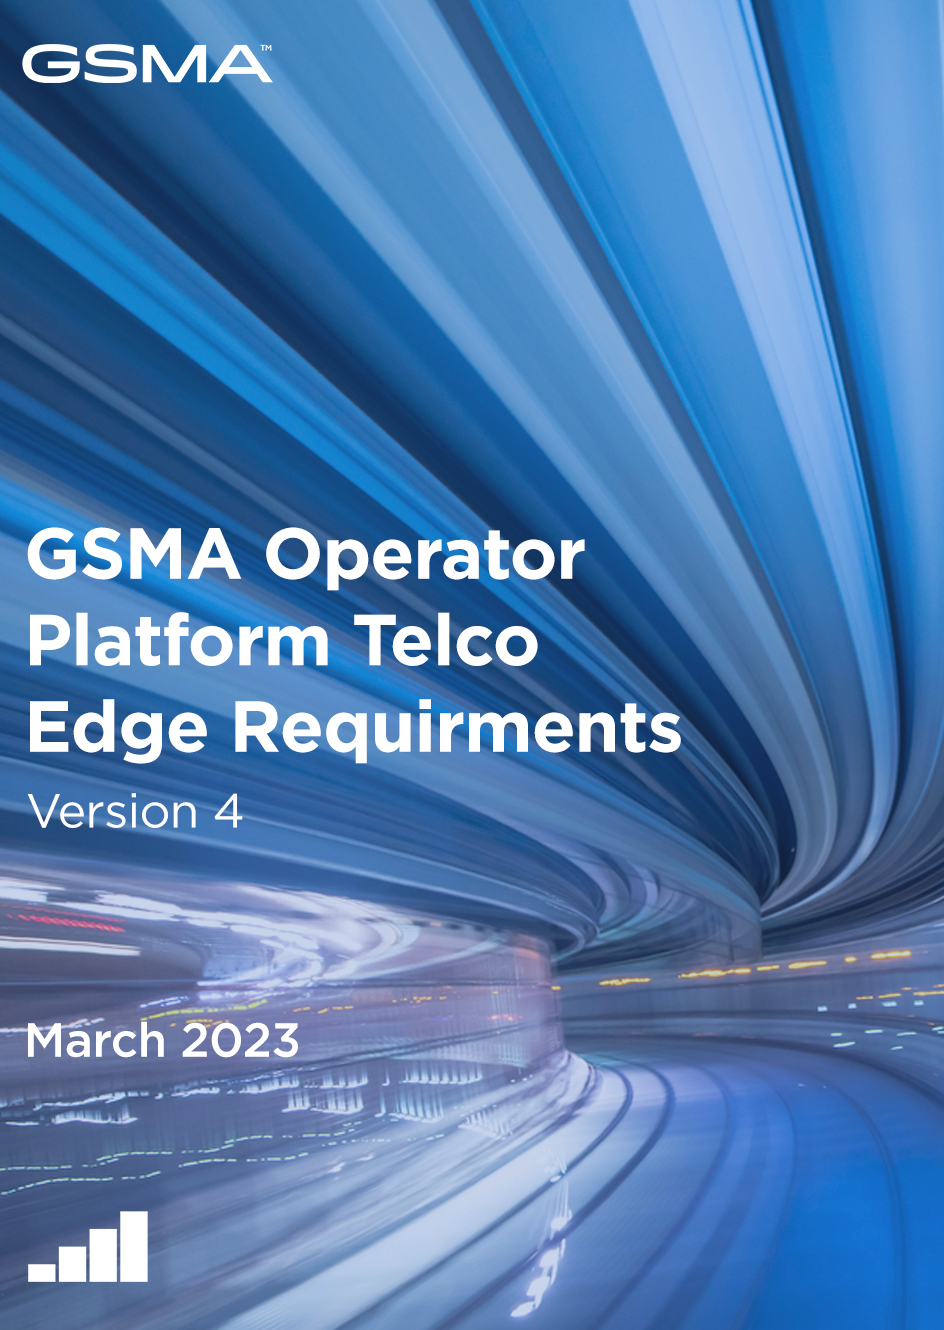 GSMA Operator Platform Group – Operator Platform Telco Edge Requirements image